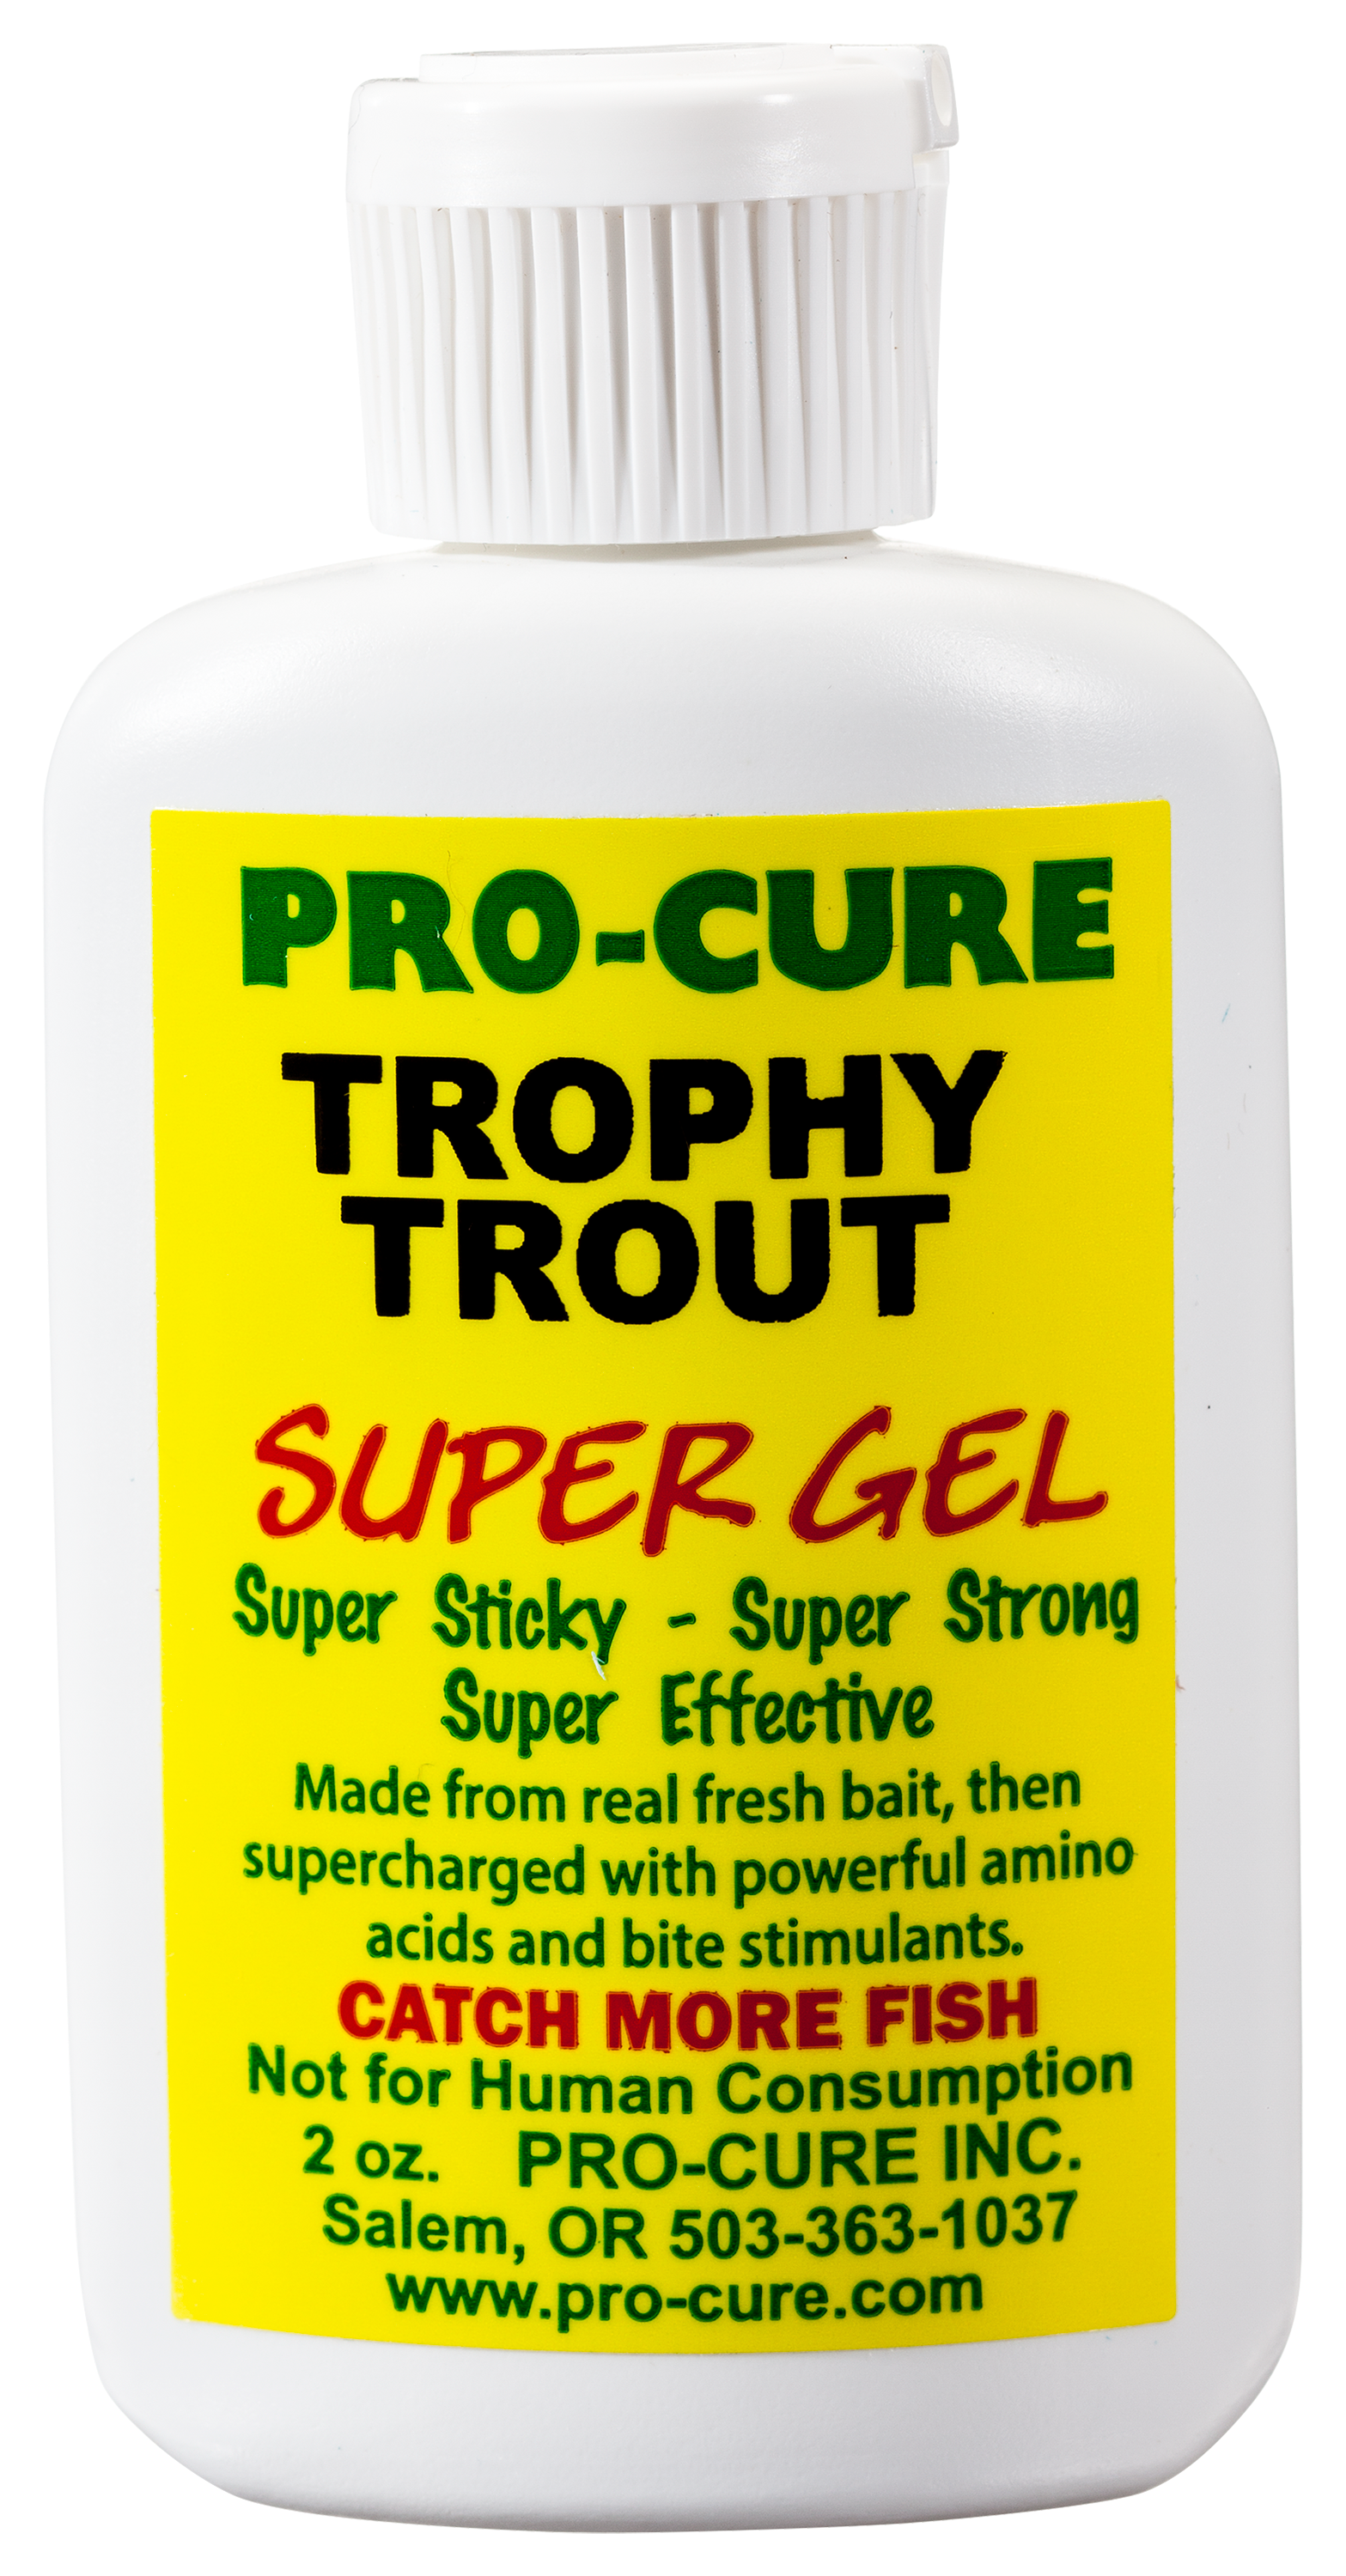 Pro-Cure Super Gel Fish Attractant